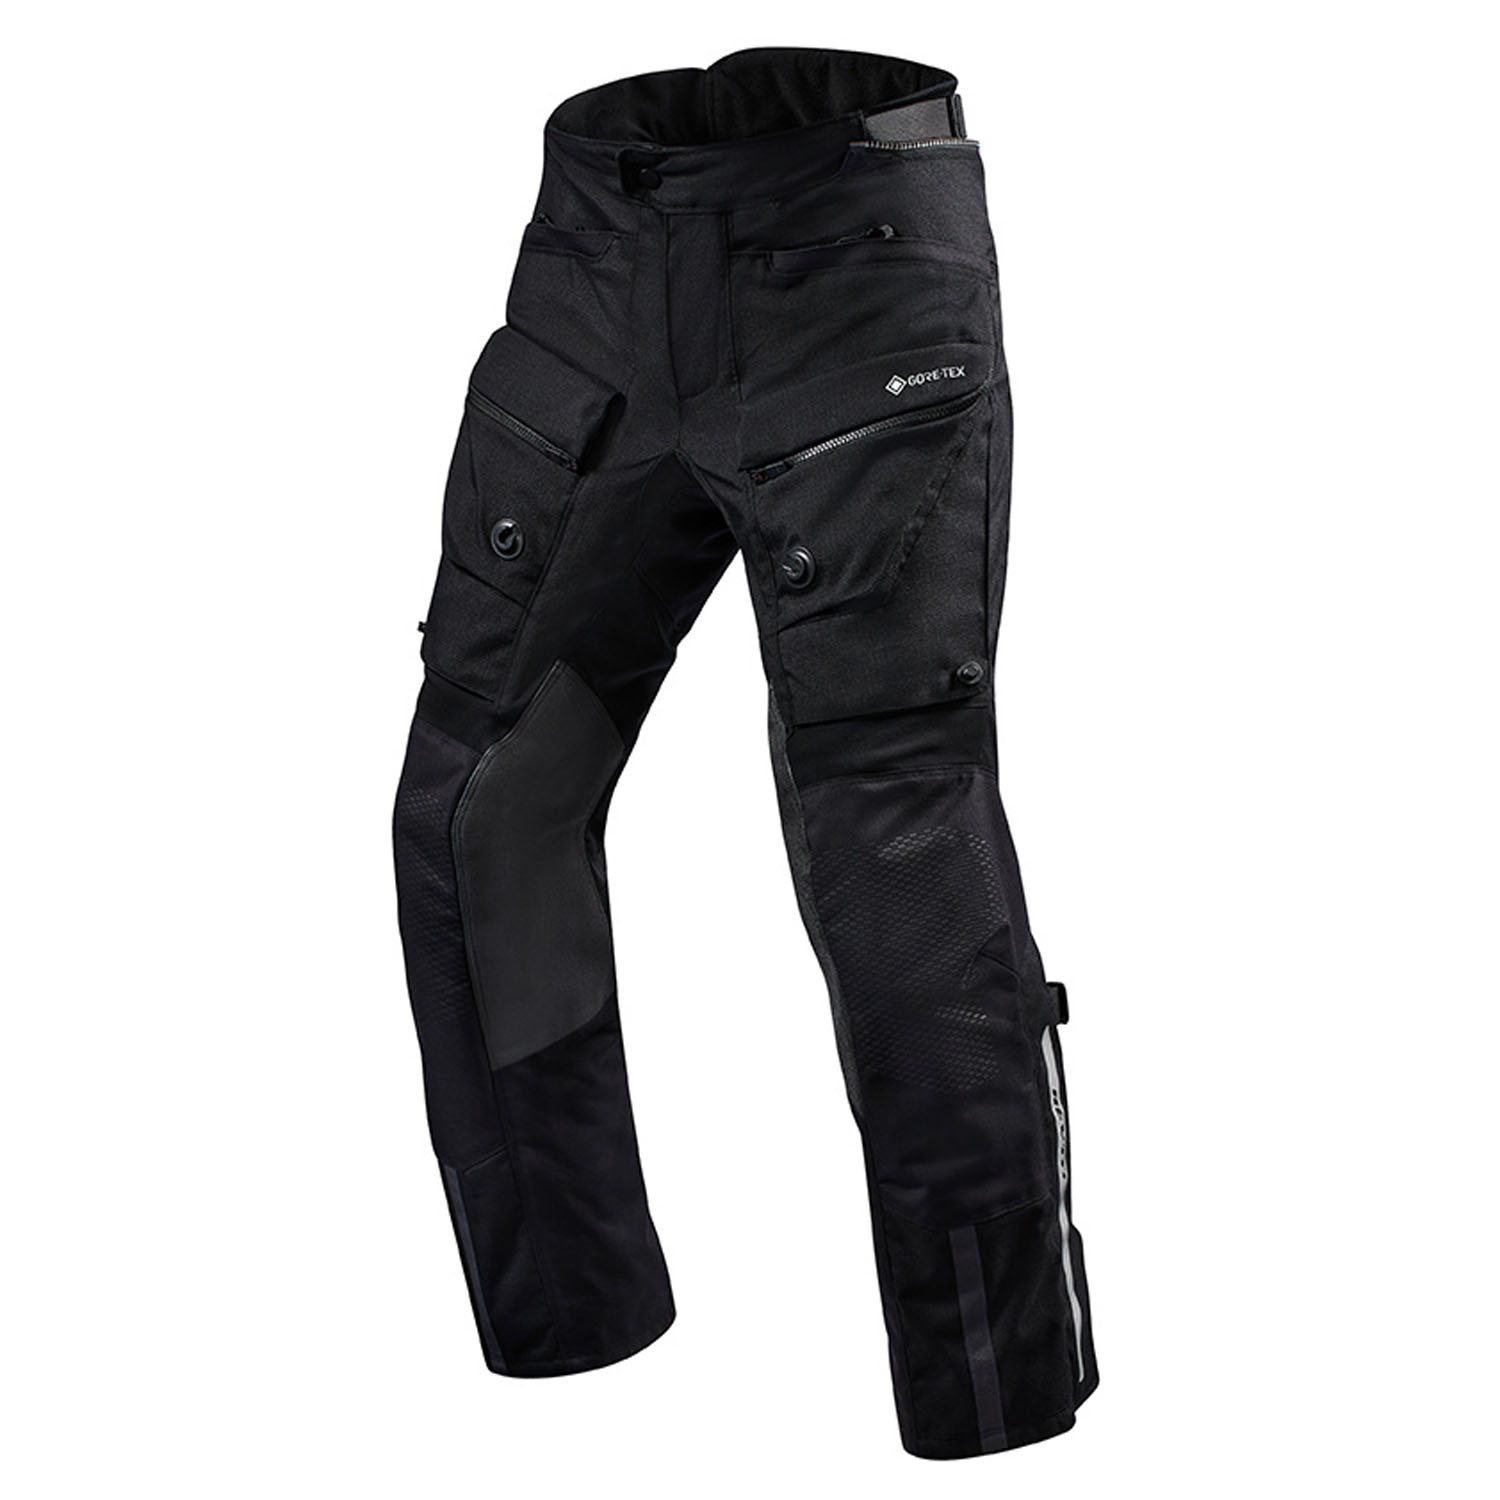 Image of REV'IT! Trousers Defender 3 GTX Black Long Motorcycle Pants Size 2XL EN